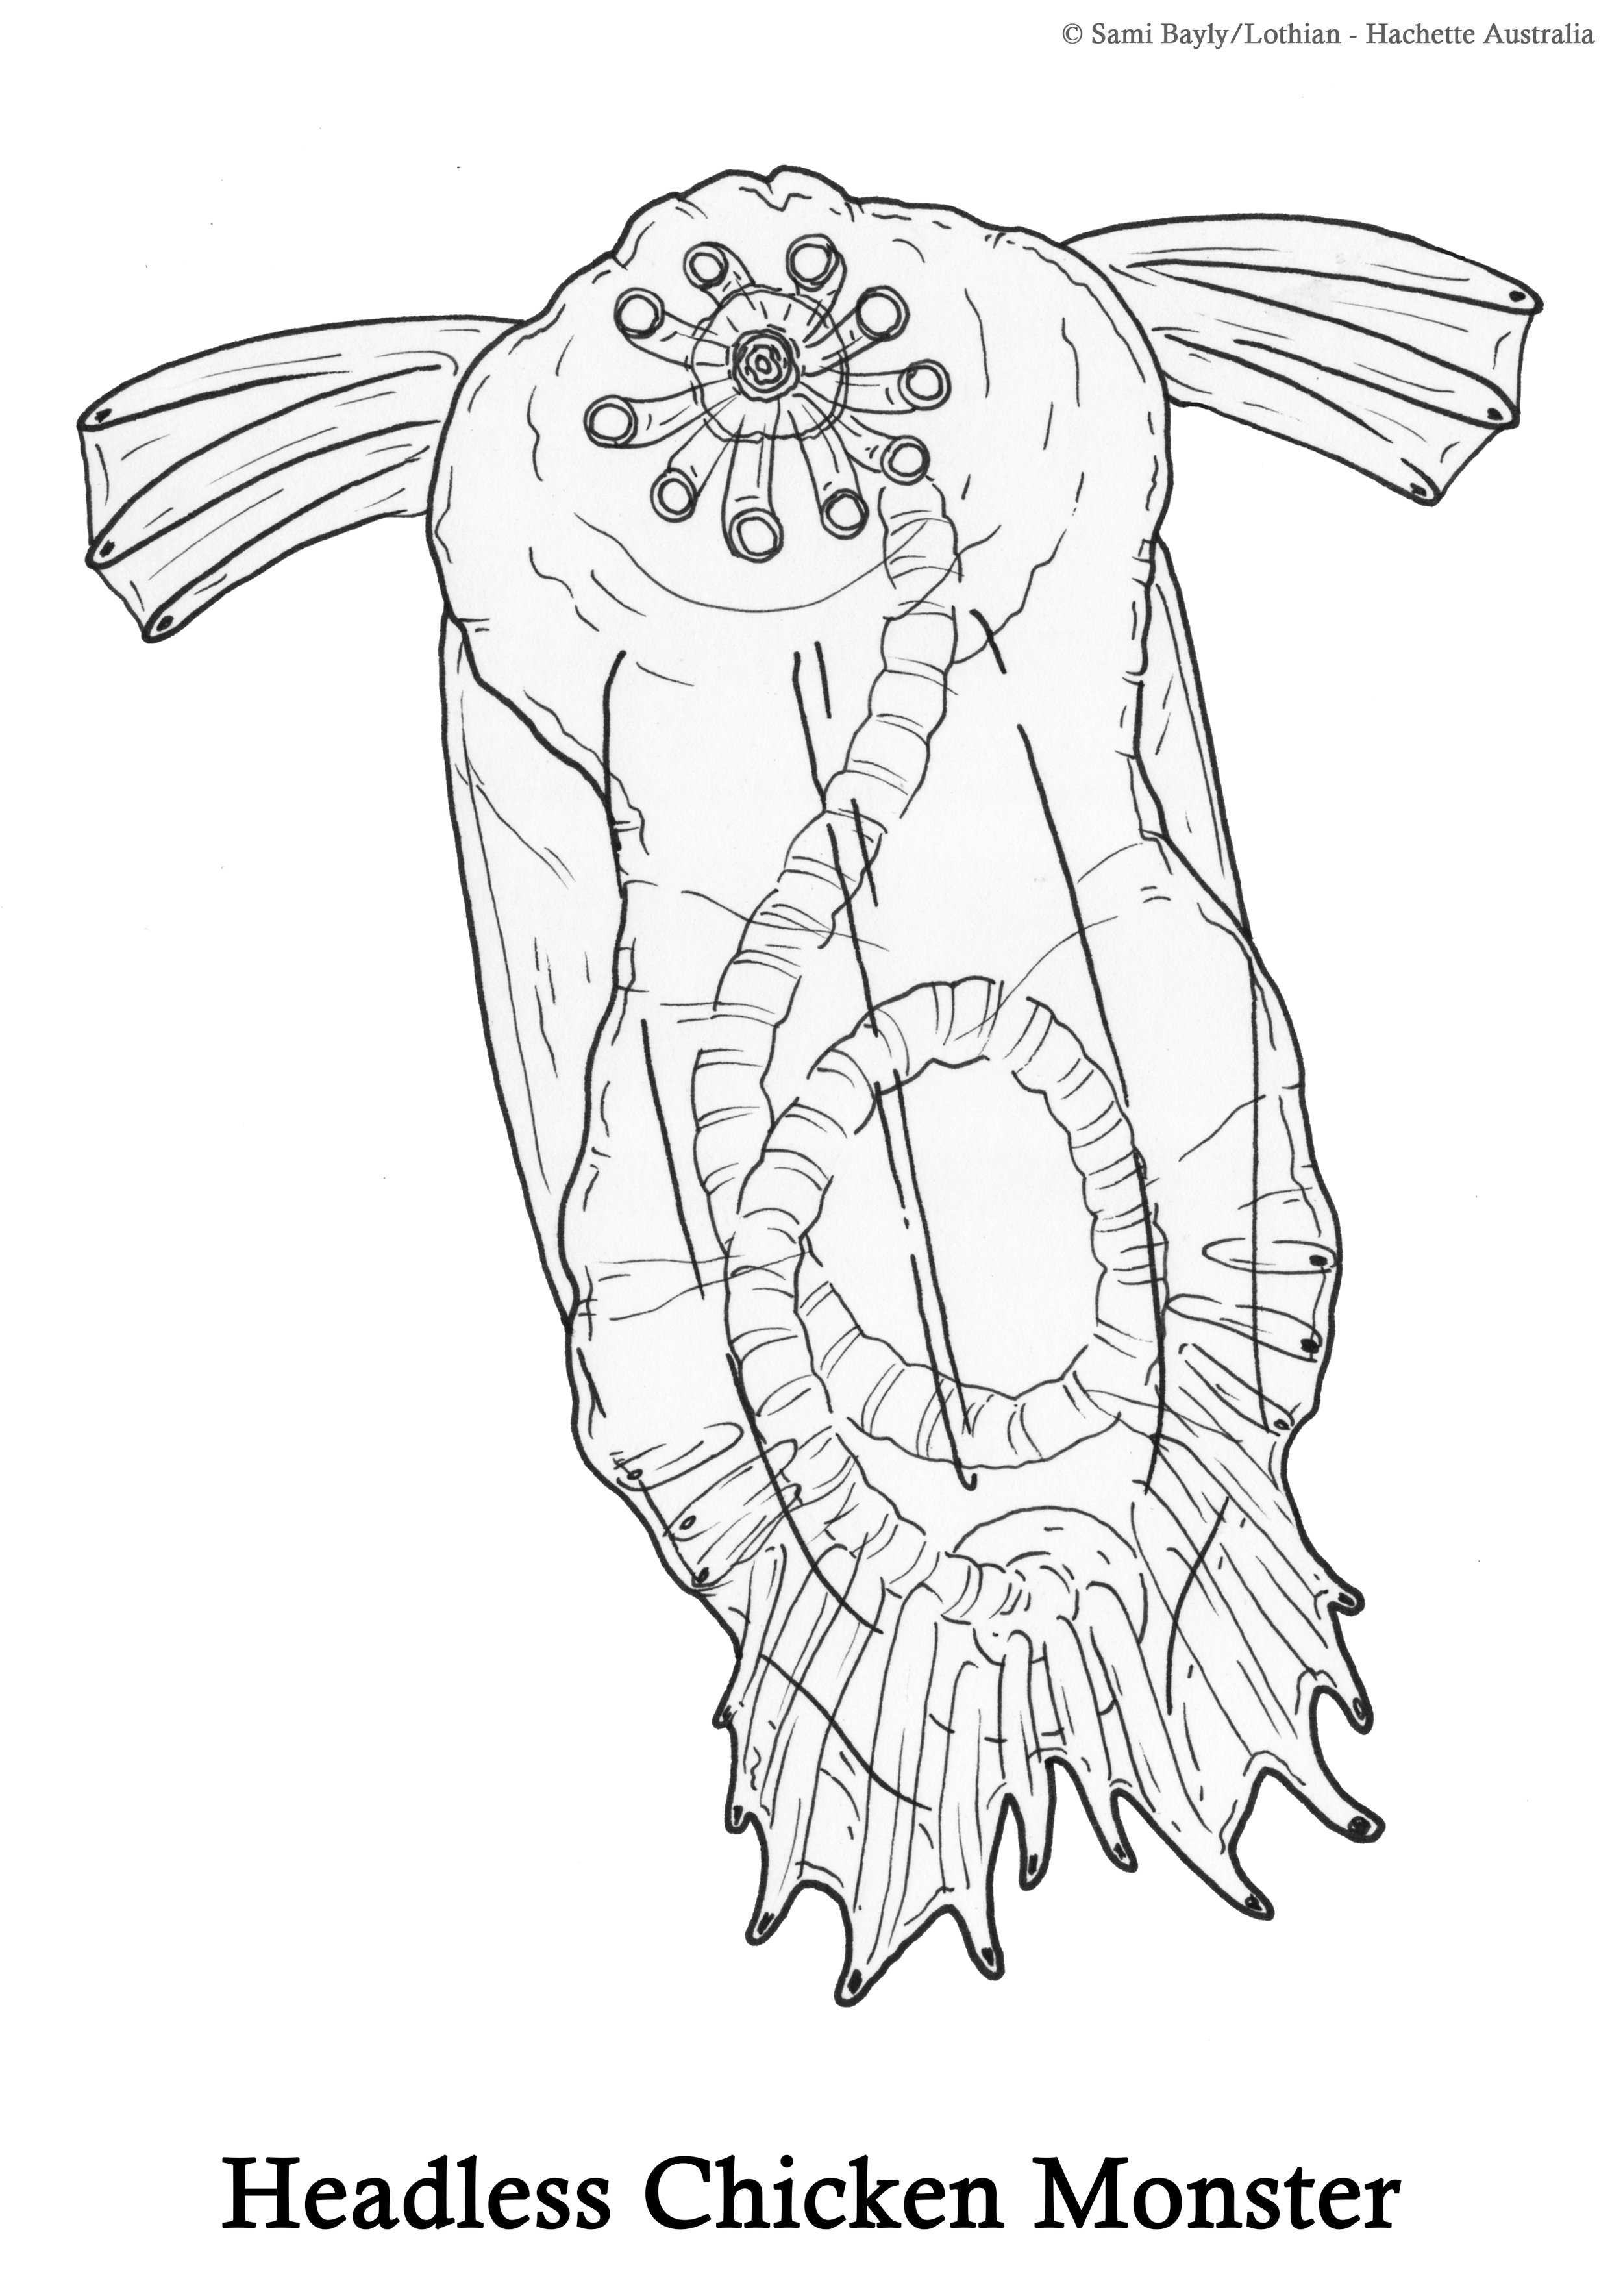 Headless Chicken Monster Line Drawing.jpg